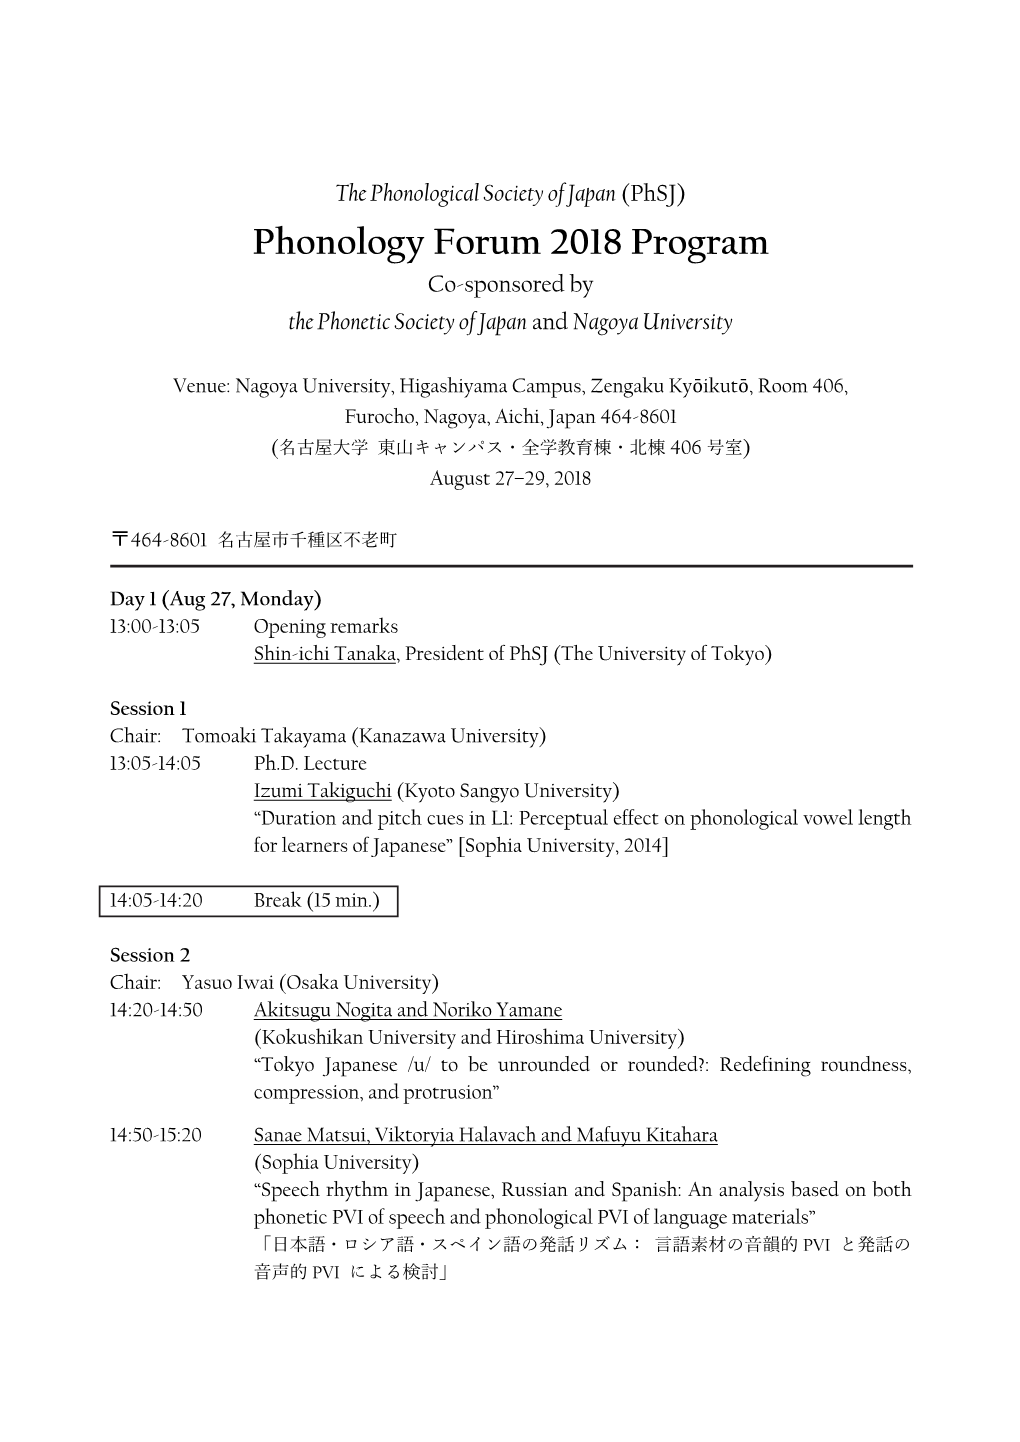 Phonology Forum 2018 Program Co-Sponsored by the Phonetic Society of Japan and Nagoya University